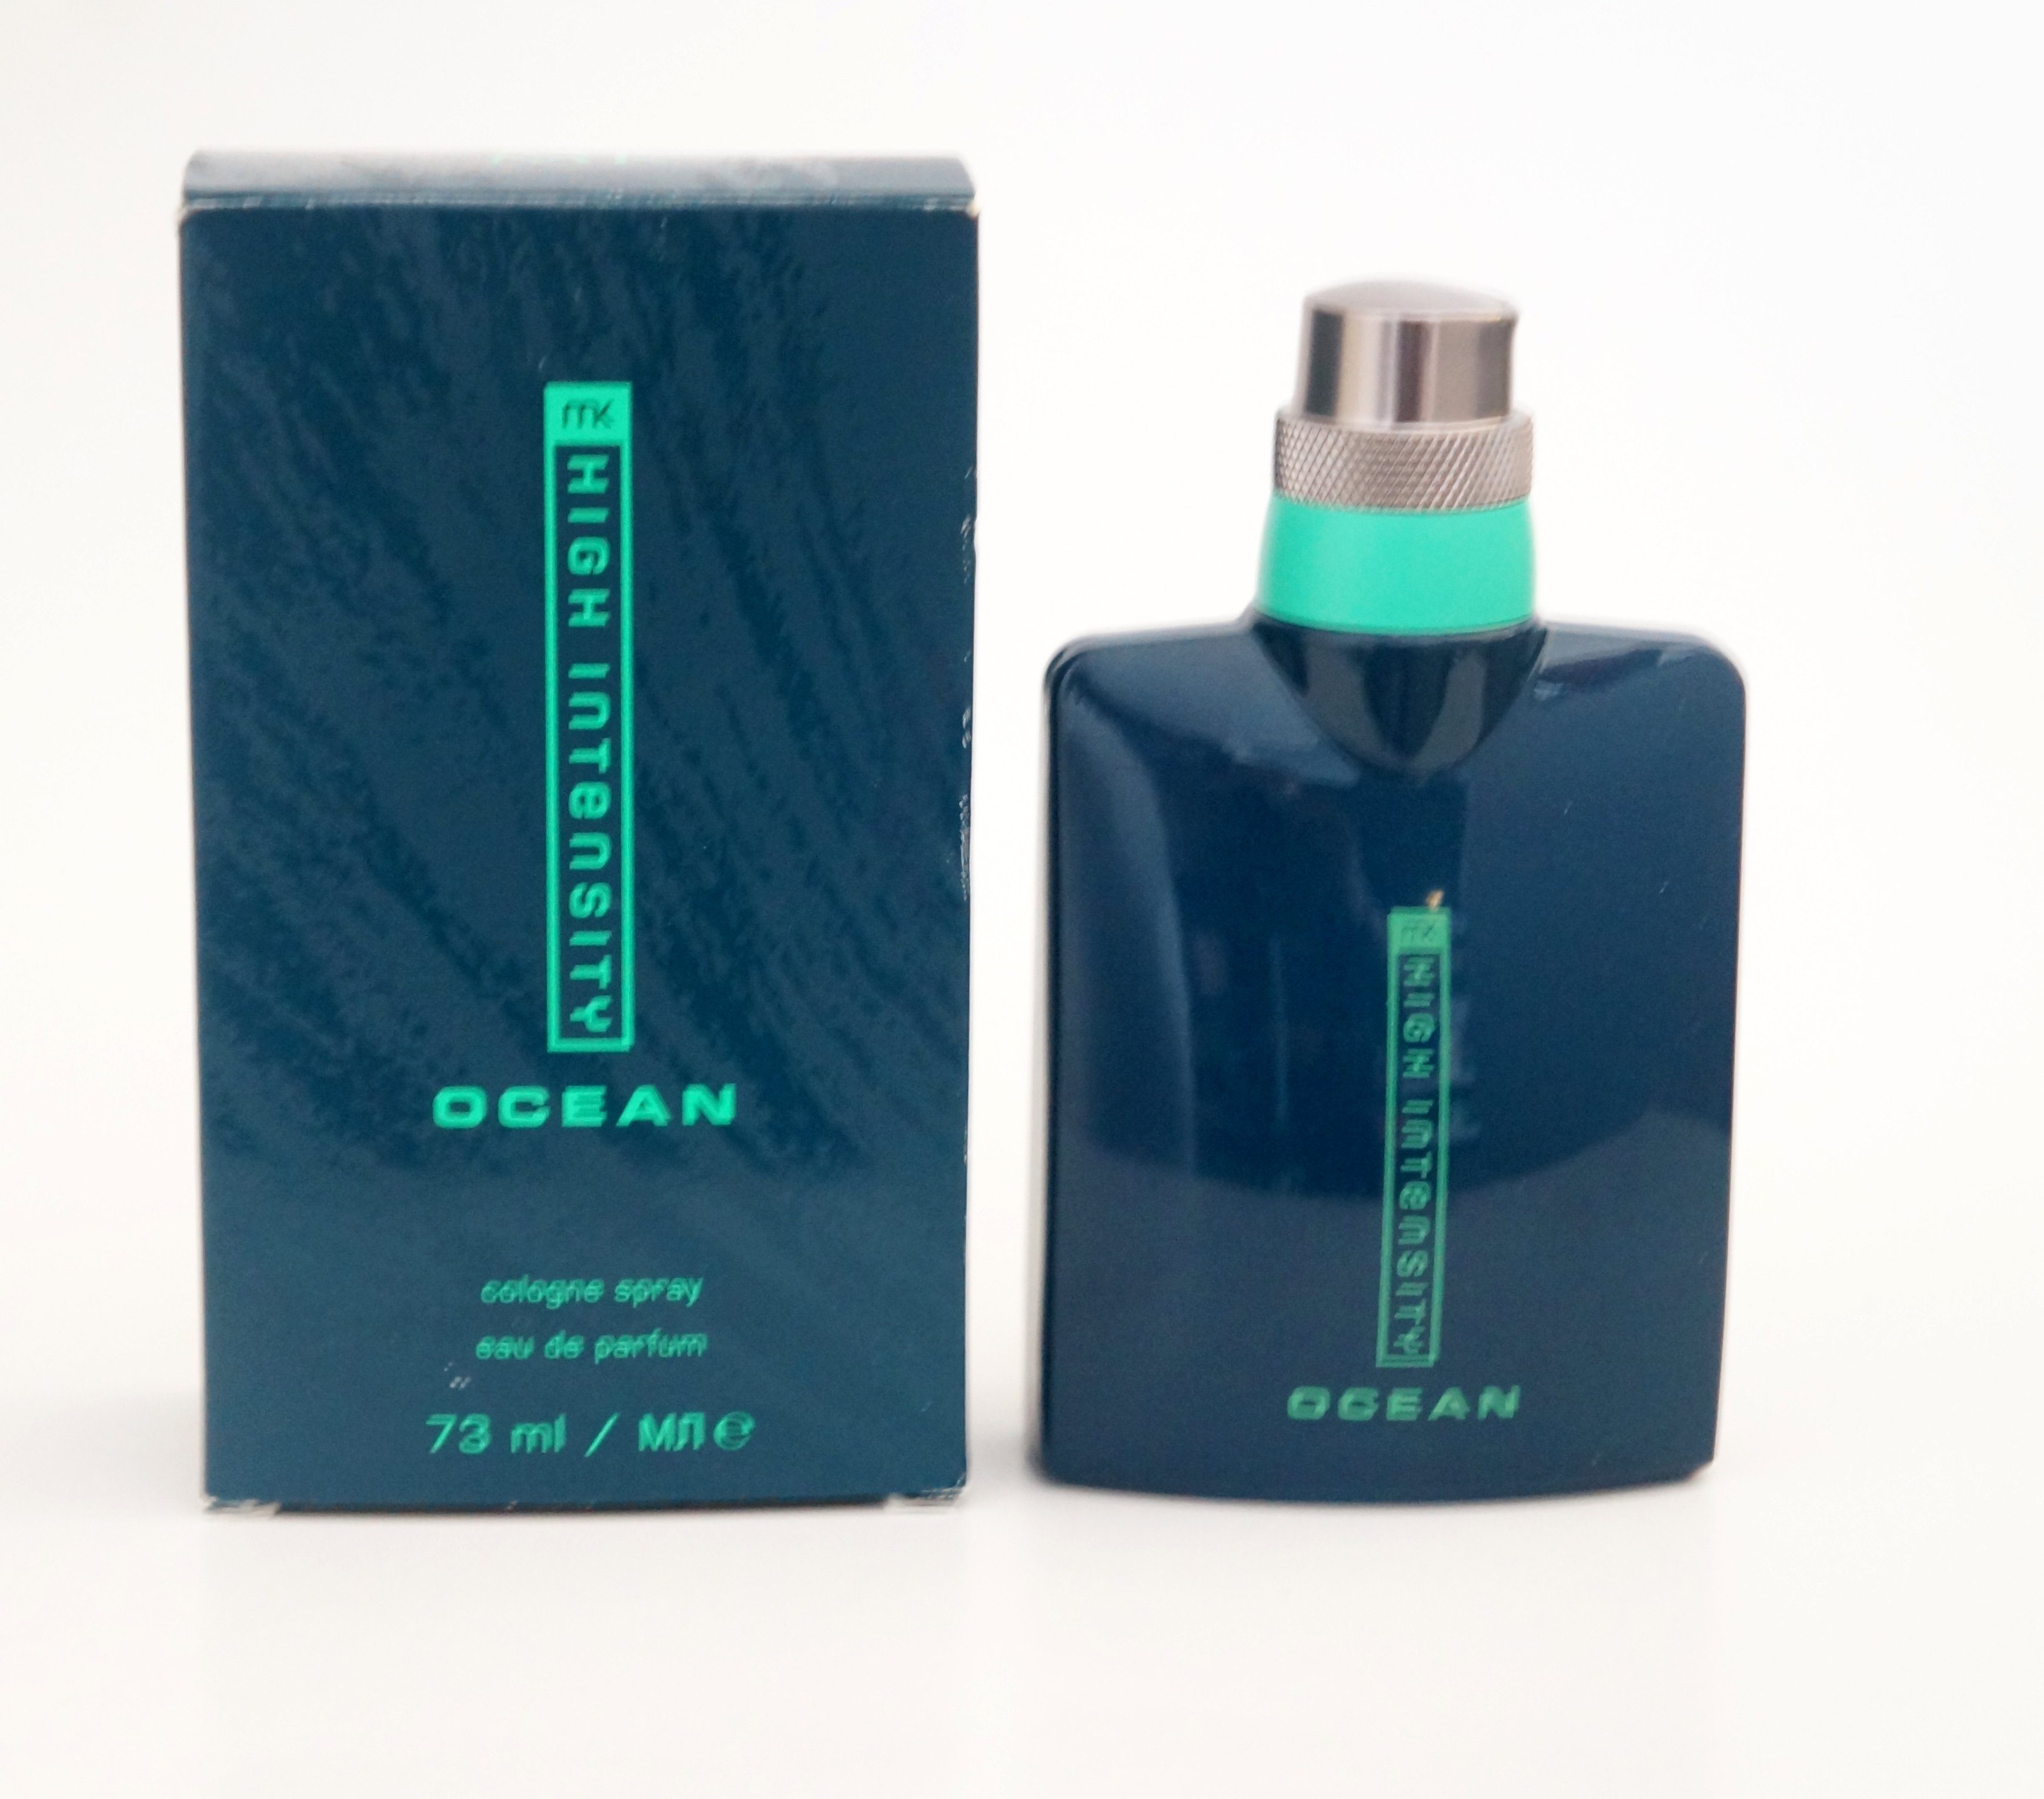 Mary Kay Eau de Cologne High Intensity Ocean Parfum Cologne Spray für Ihn 73 ml